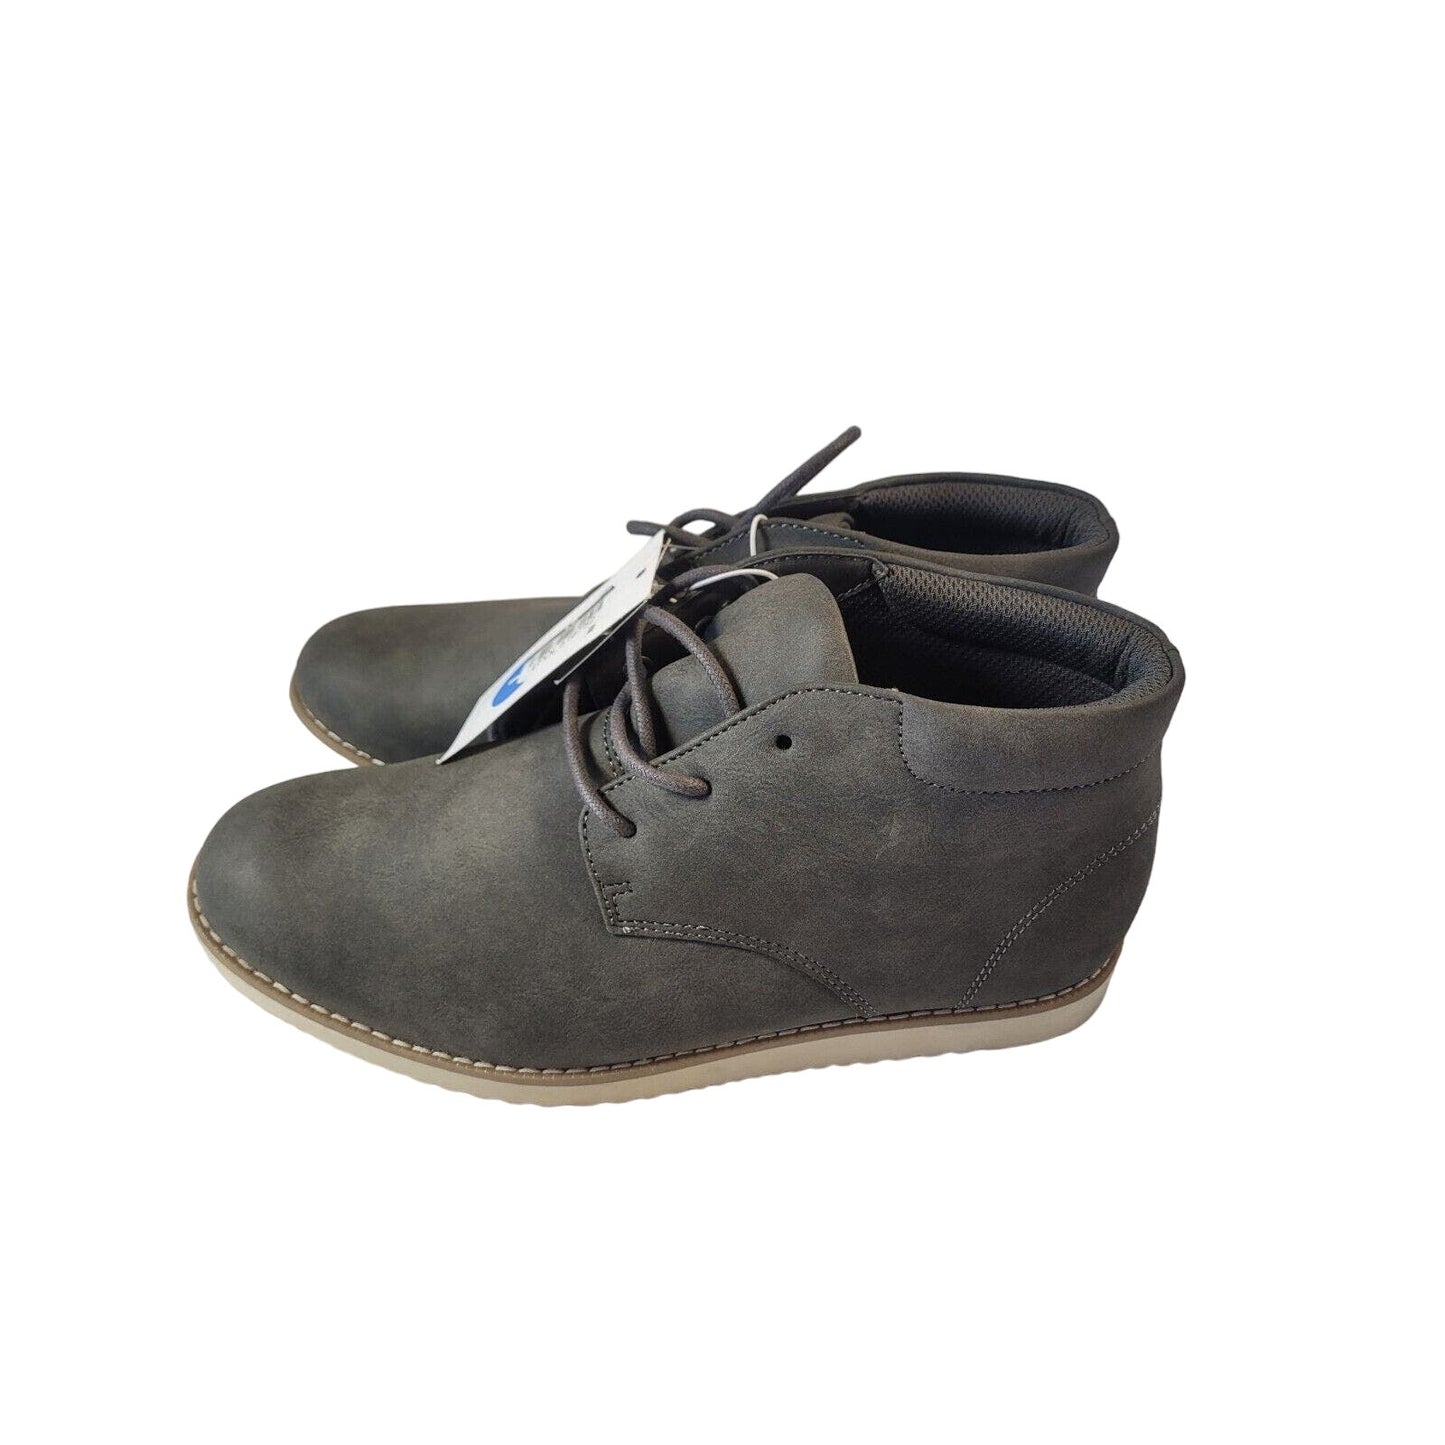 Men's Gibson Hybrid Chukka Sneaker Boots - Goodfellow & Co Size 7